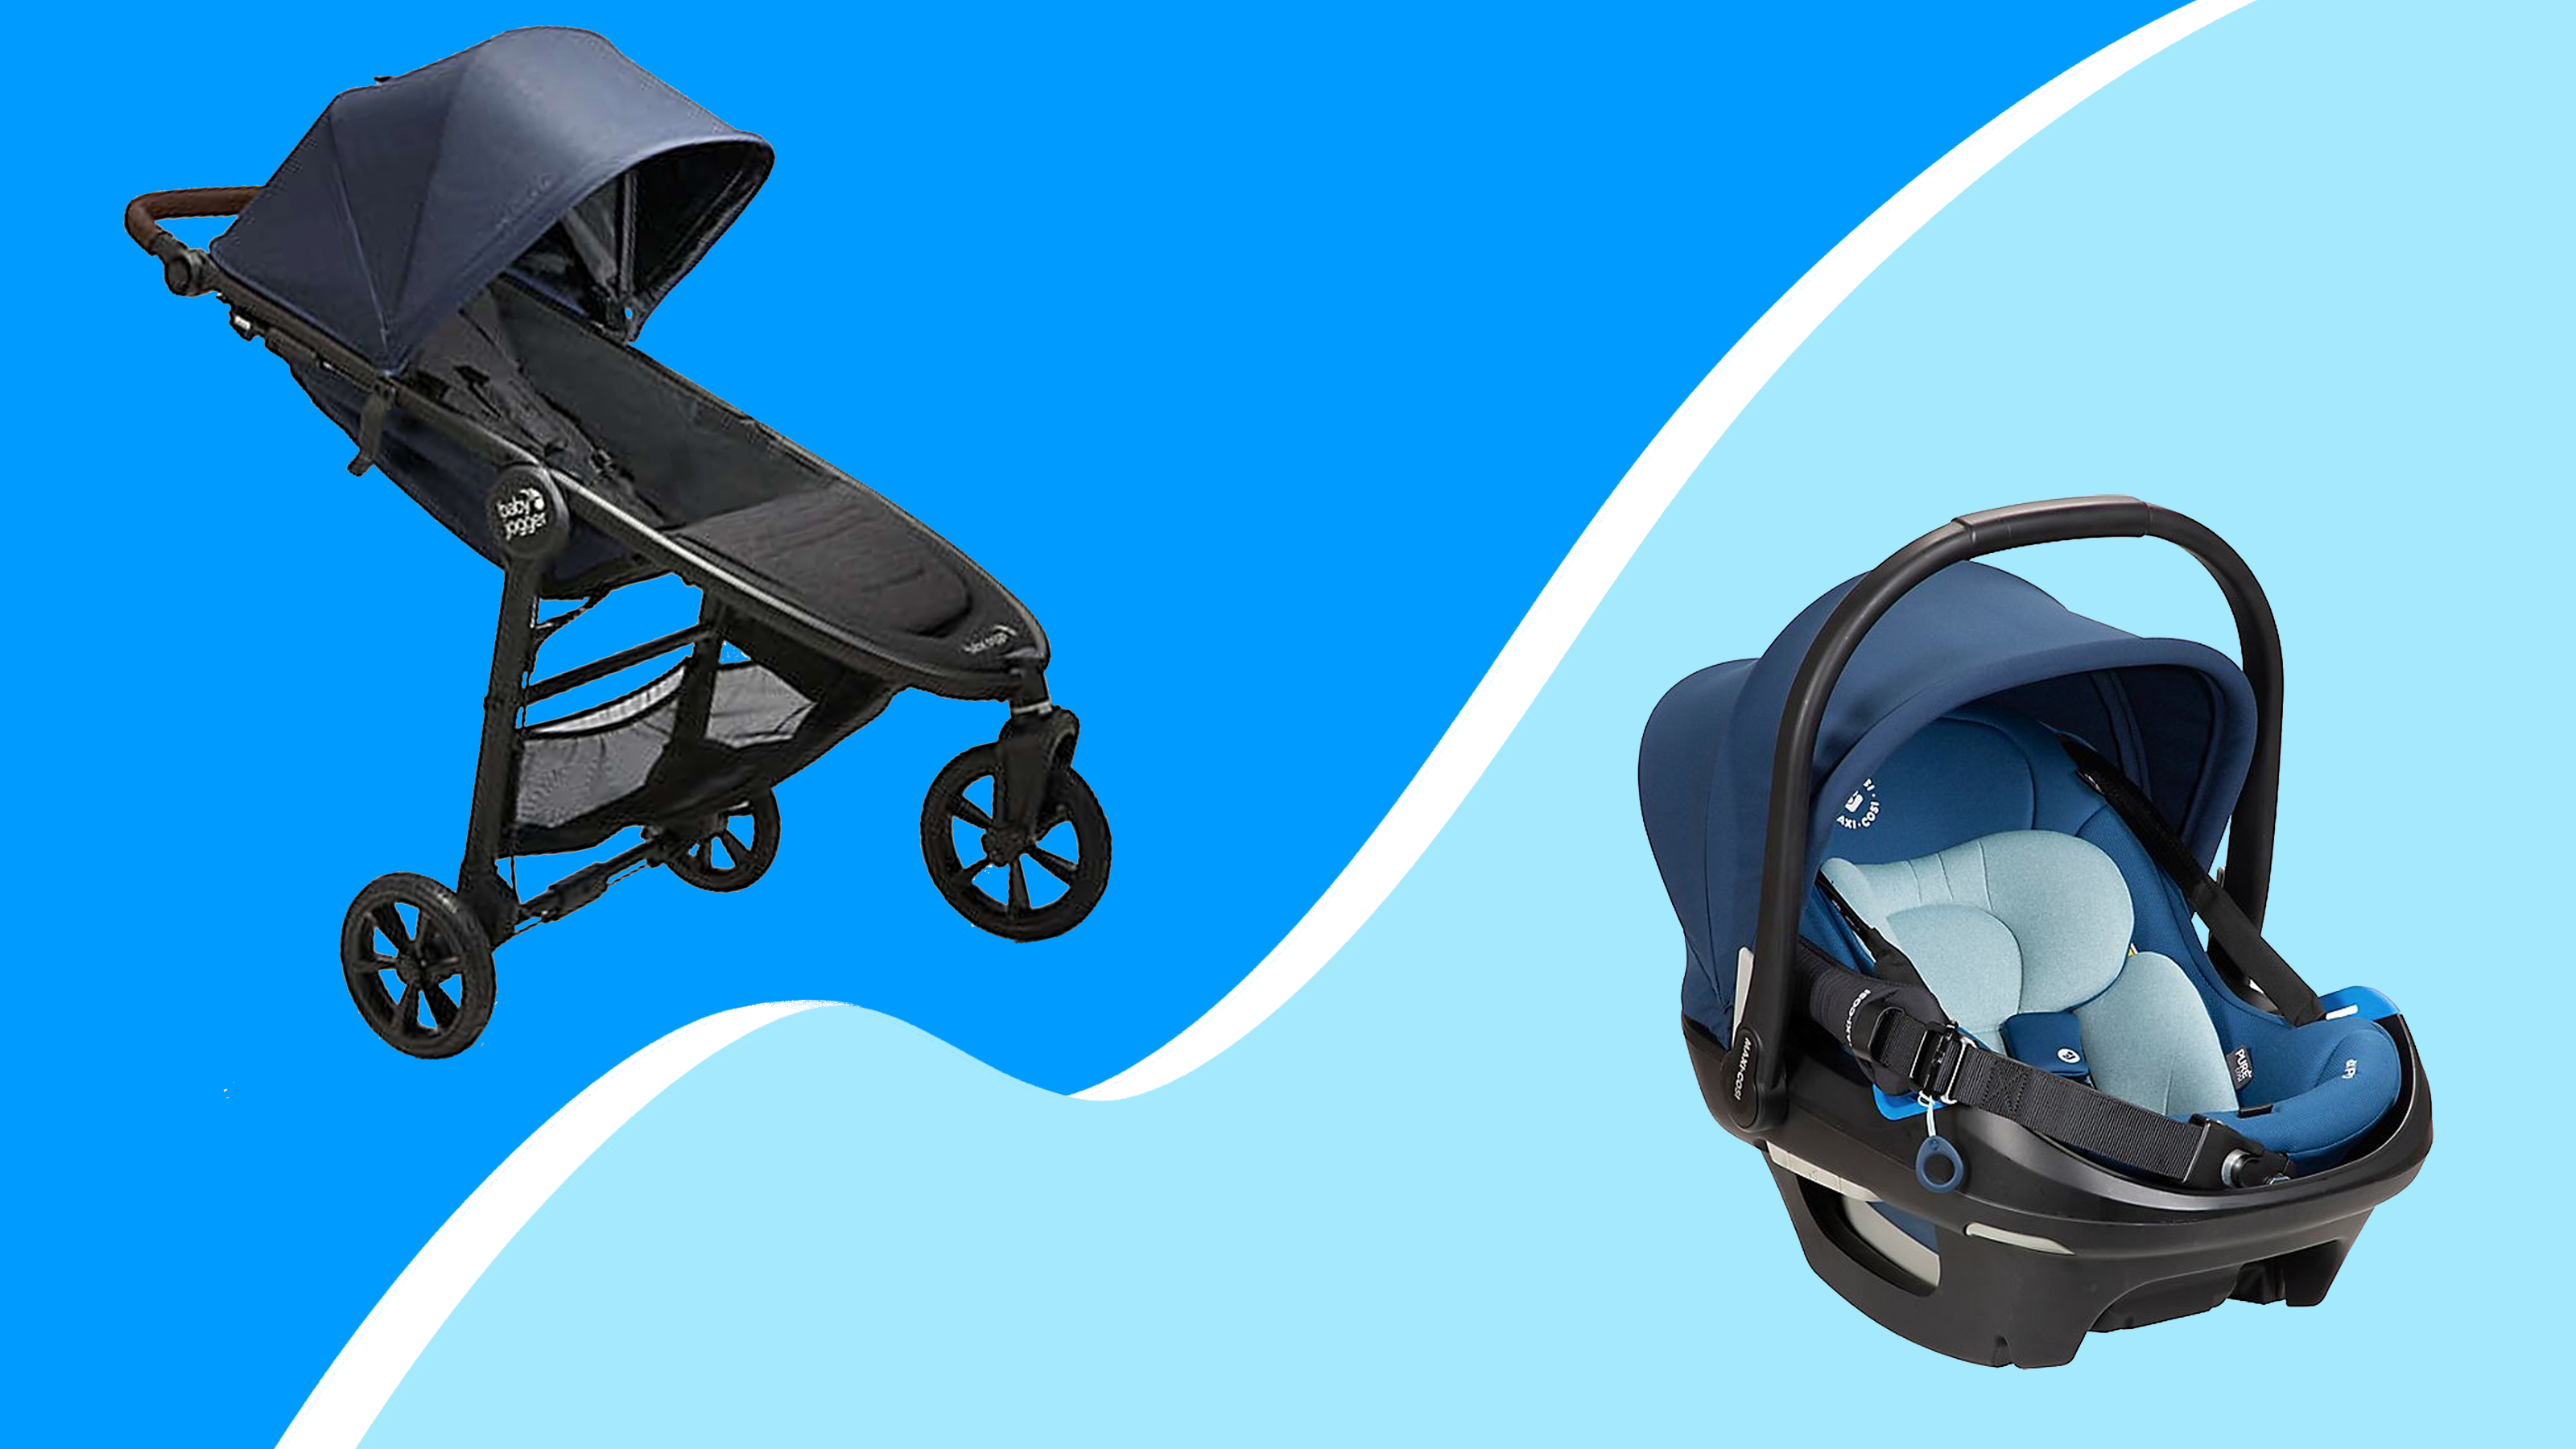 BuyBuyBaby sale: Shop strollers, car 